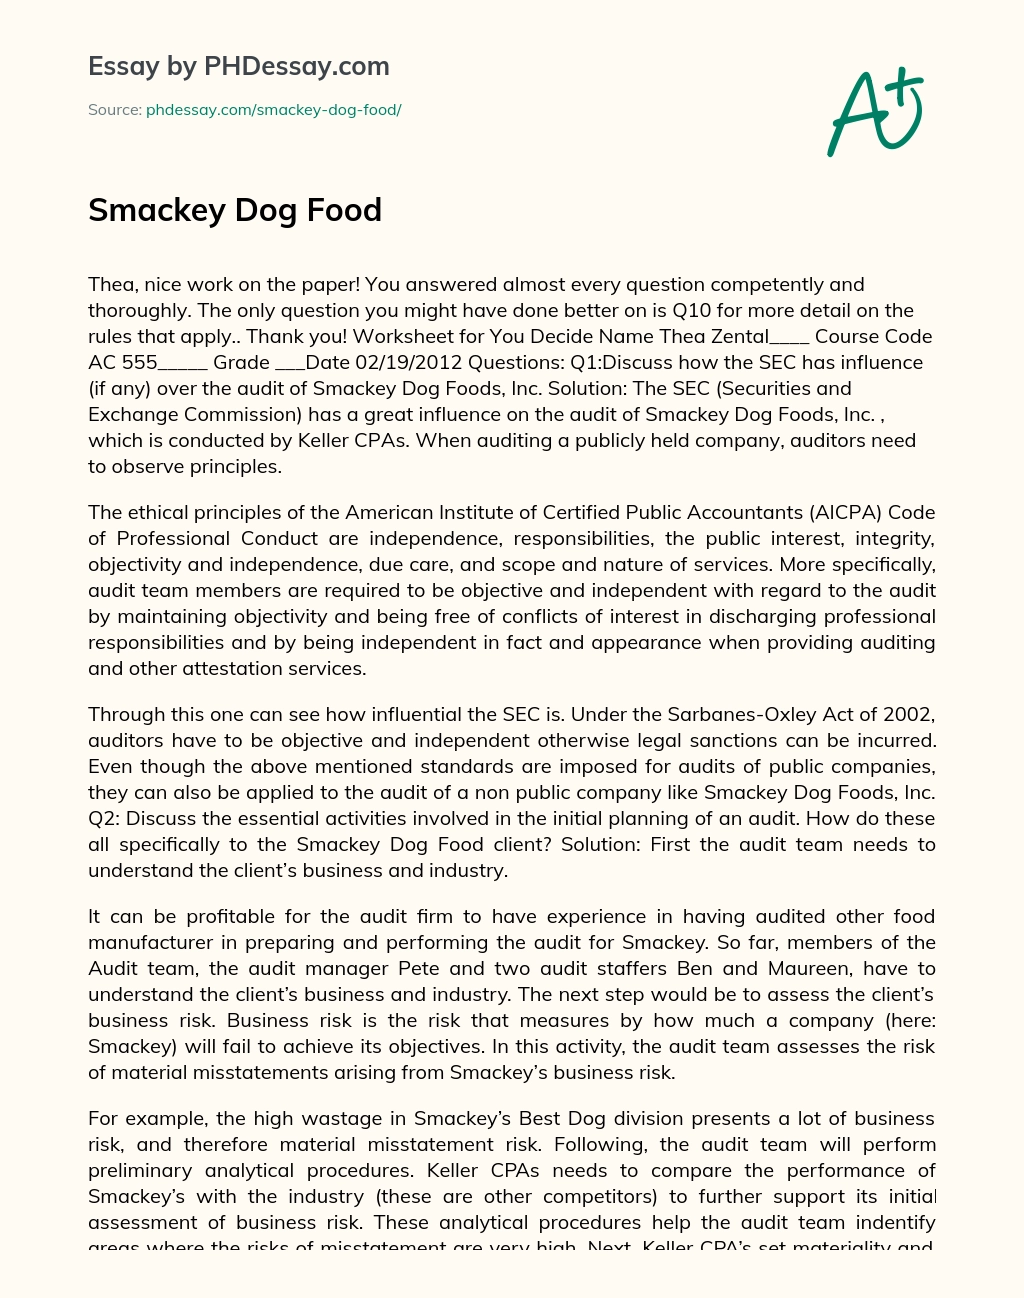 Smackey Dog Food essay